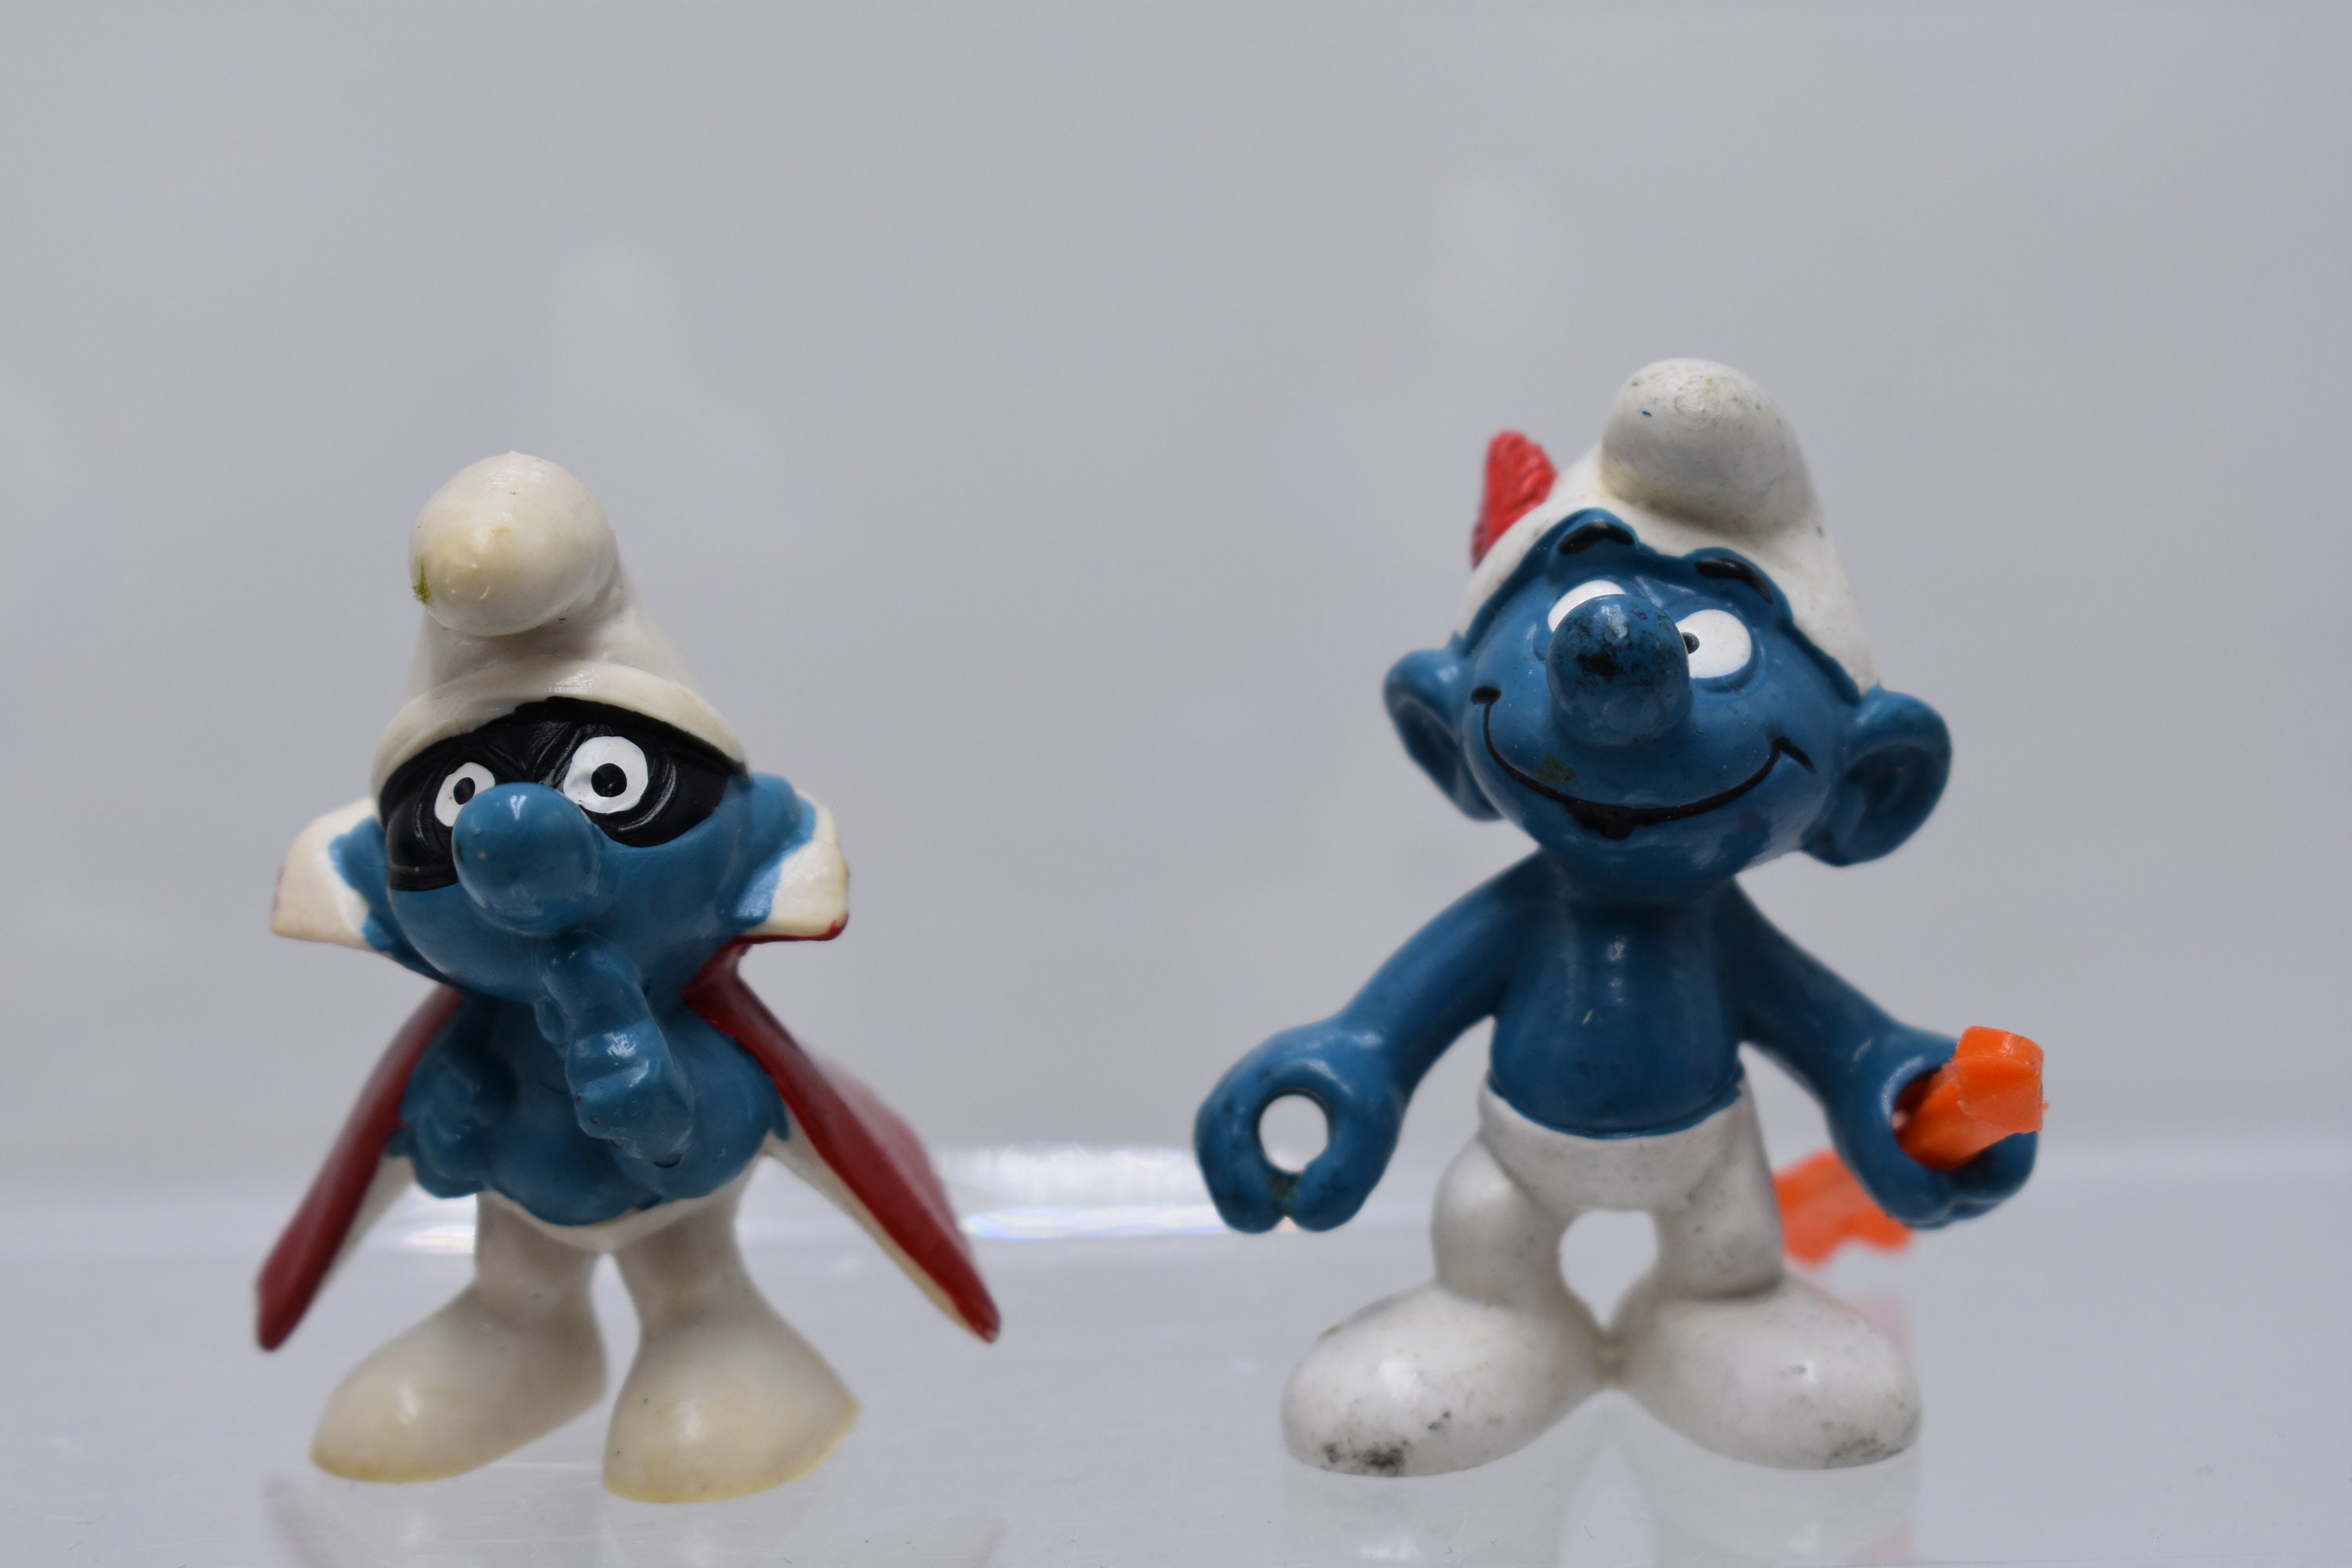 Lot (17) Vintage 60s 70s 80s Original Smurfs Toys Peyo Schleich WBCO